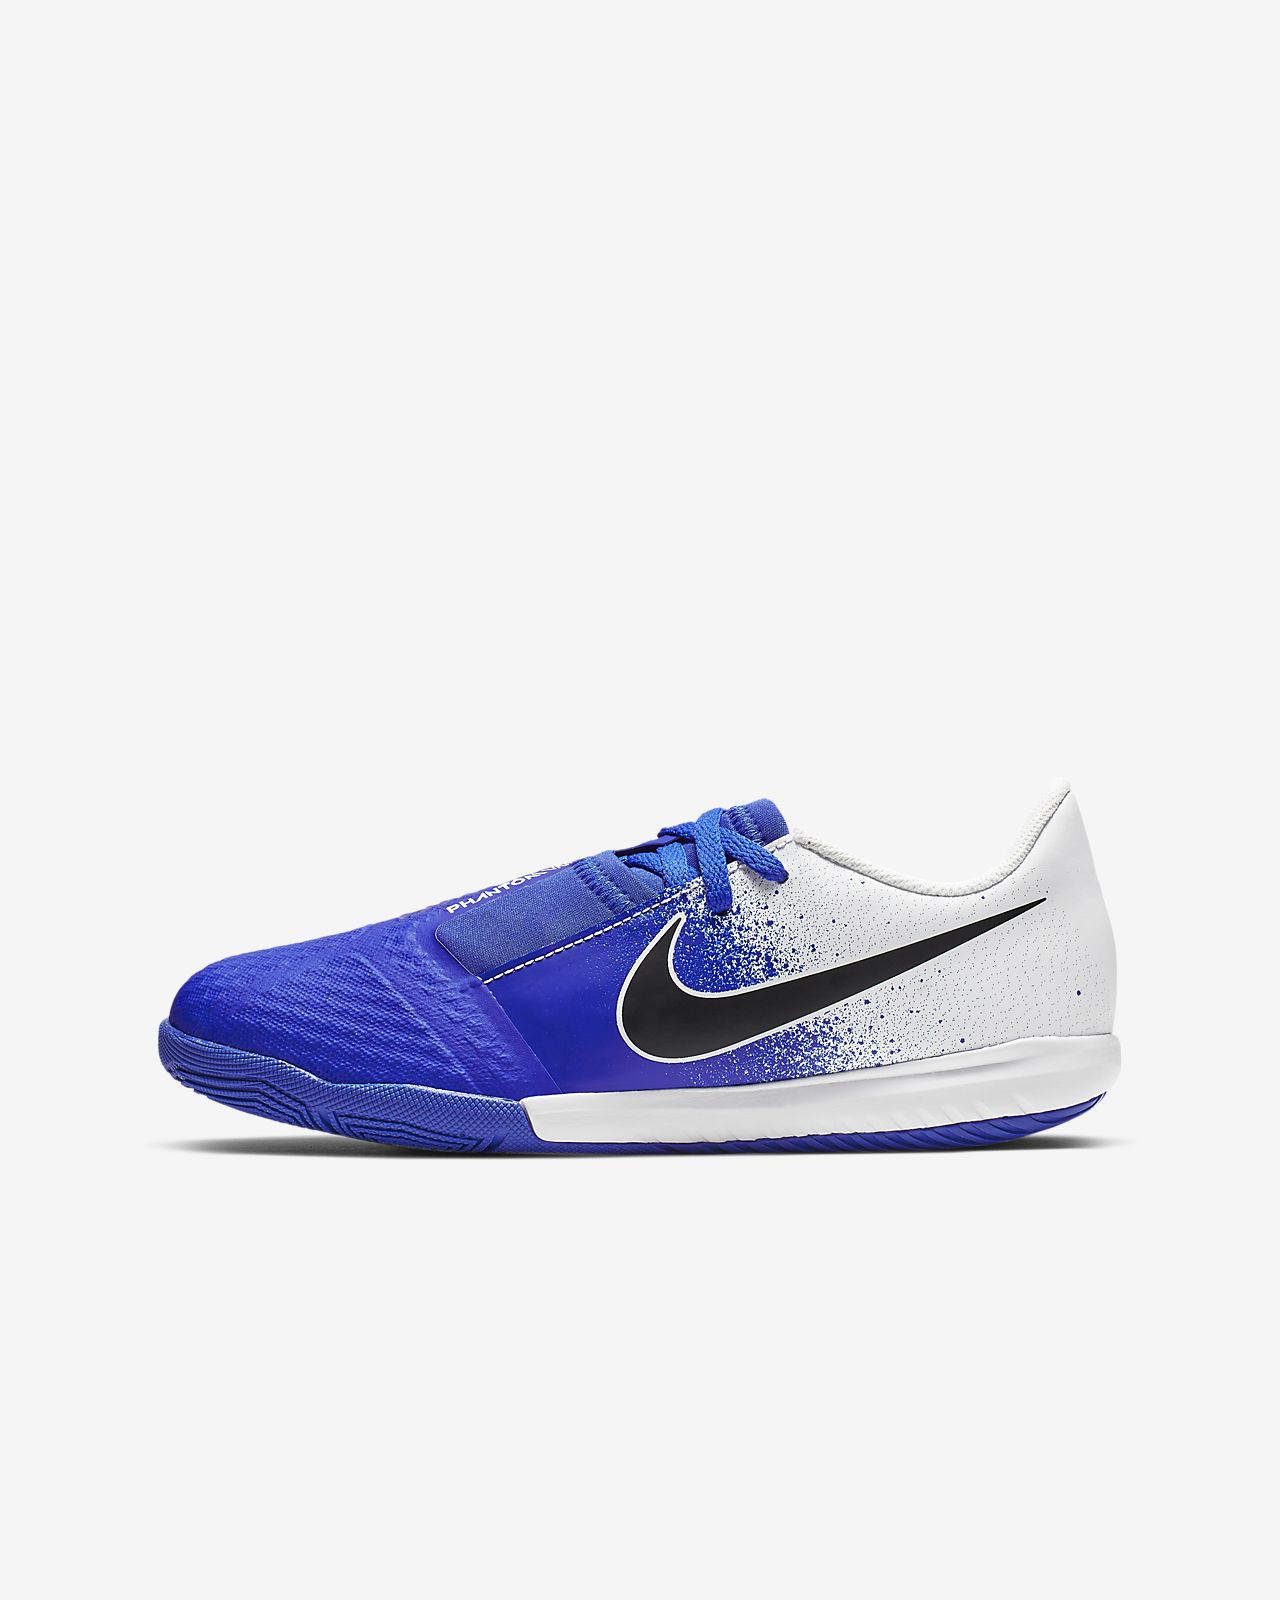 Nike Hypervenom Phantom 3 Pro DF FG Soccer Cleats Blue